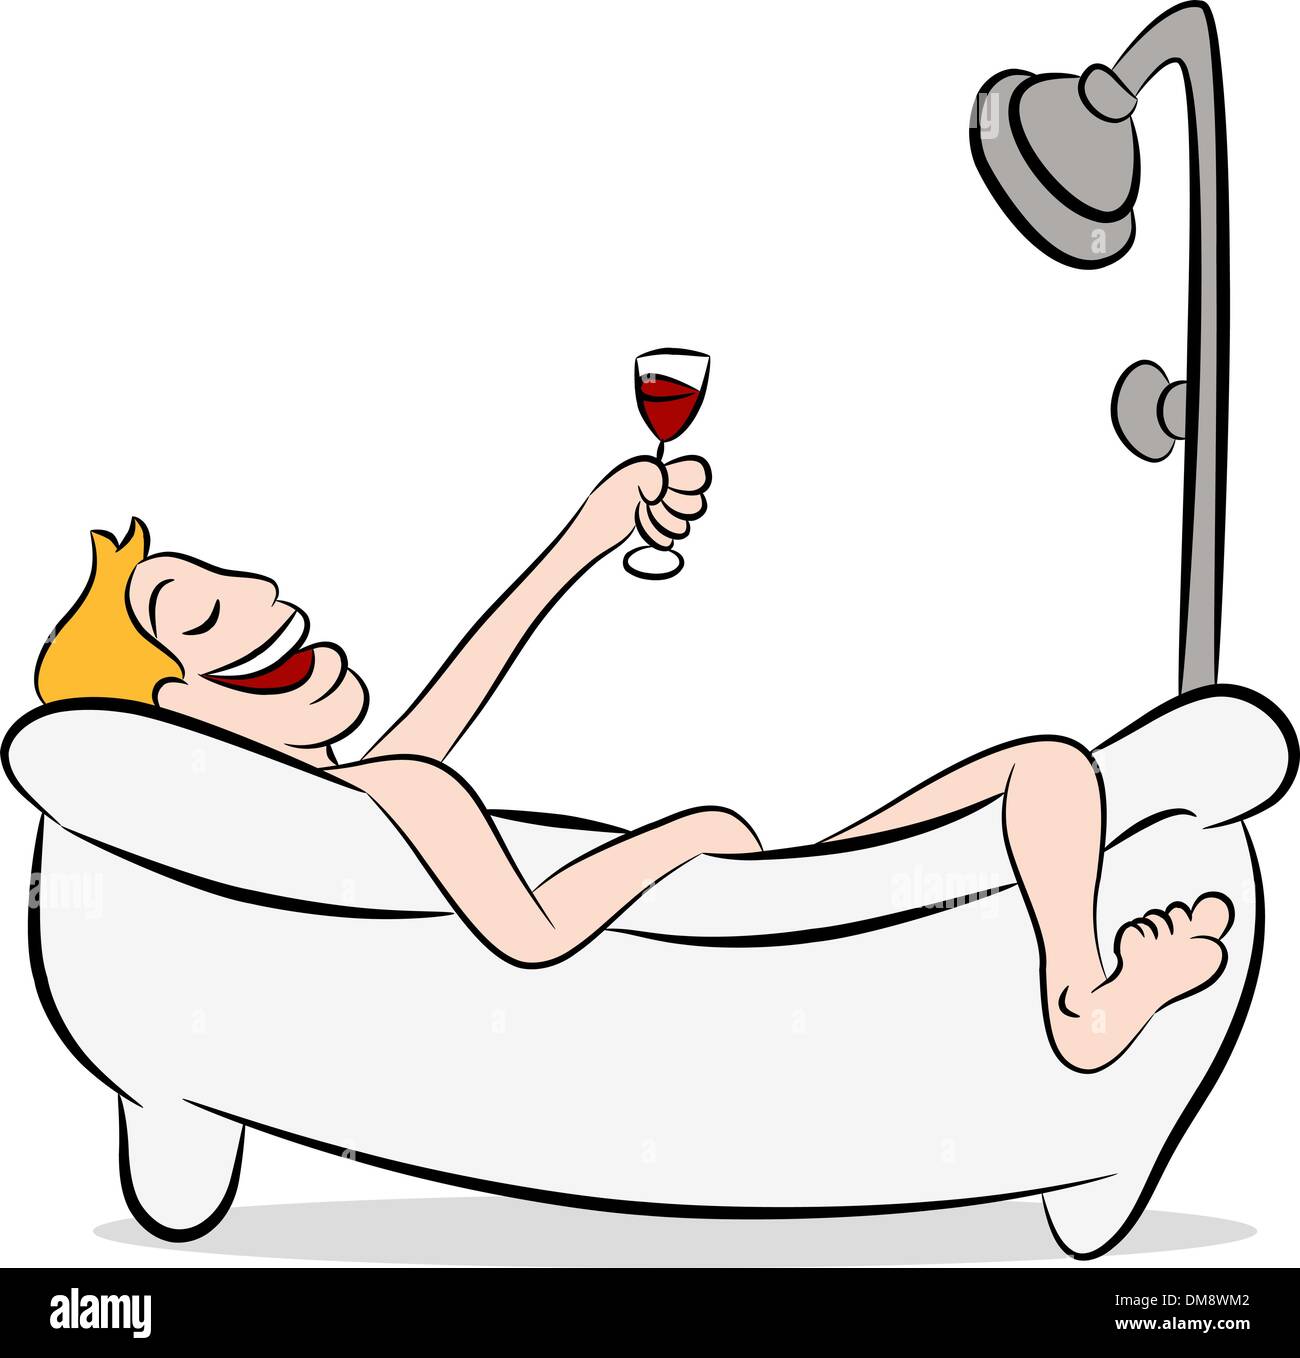 Man Drinking Wine In The Bathtub Stock Vector